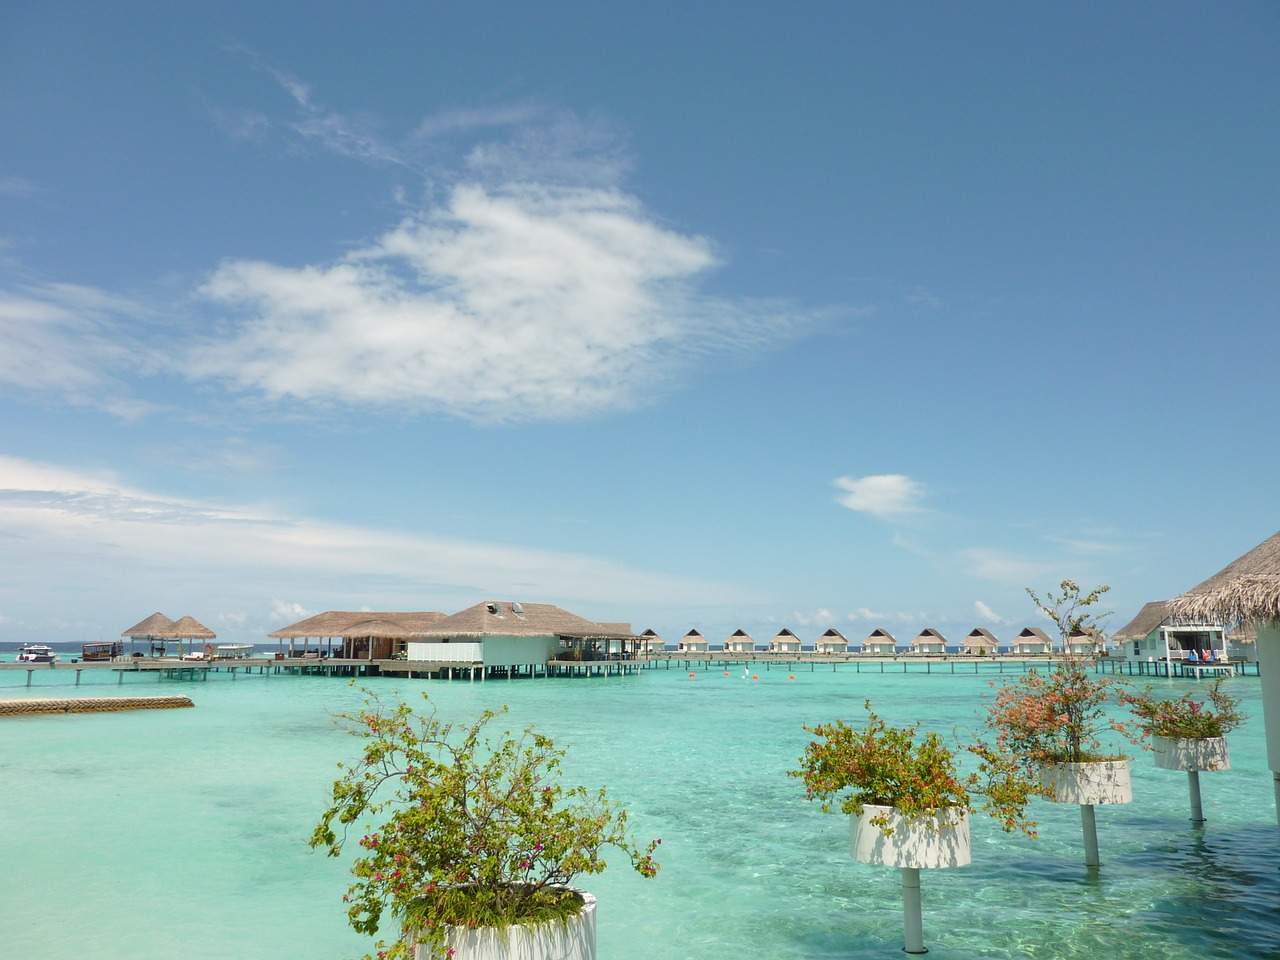 Maldives,travel,resort,island,hotel on the water - free image from needpix.com